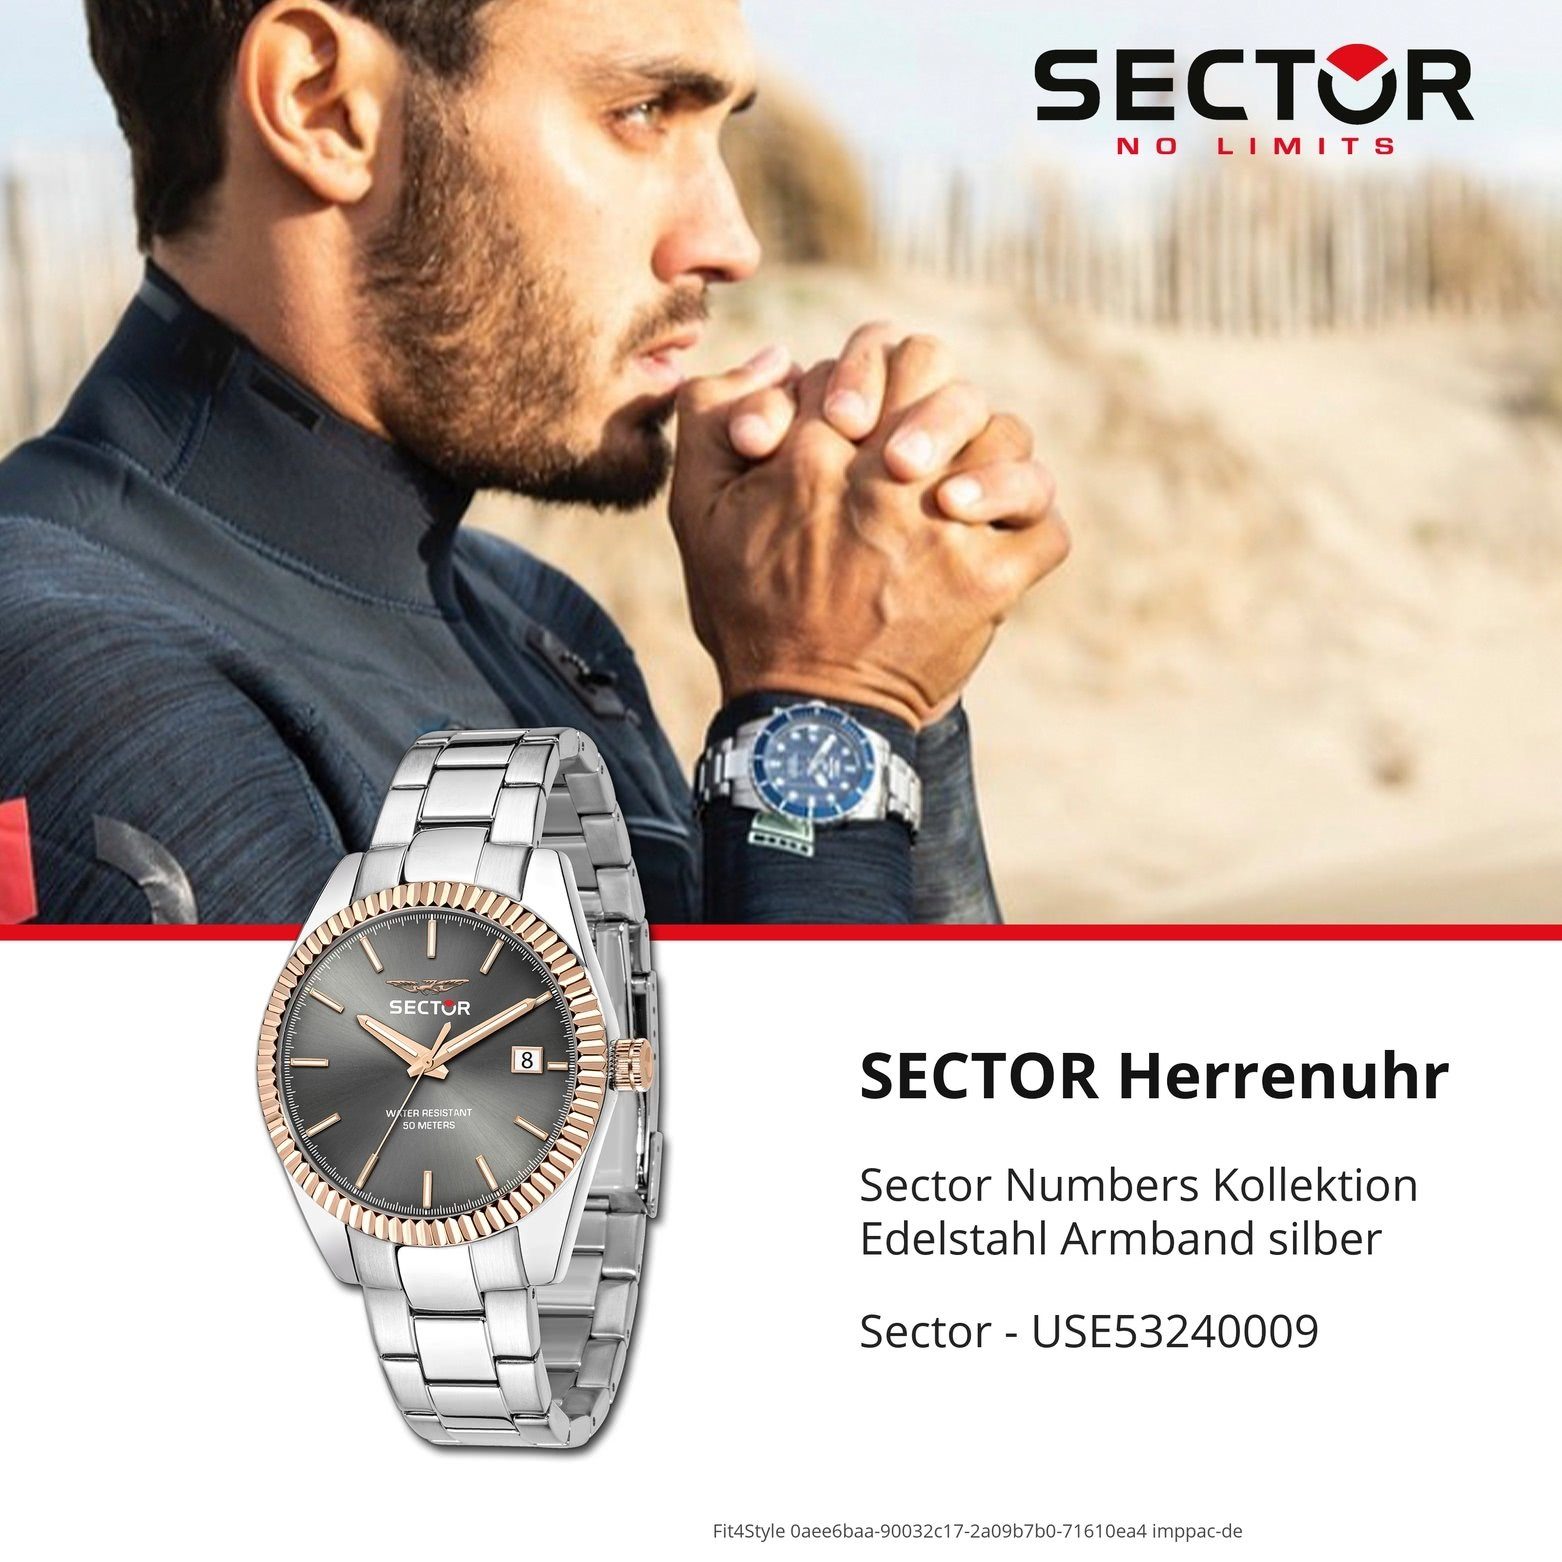 Sector Edelstahlarmband Herren Herren rund, Sector 35mm), mittel (ca. Armbanduhr Analog, Quarzuhr silber, Armbanduhr Fa